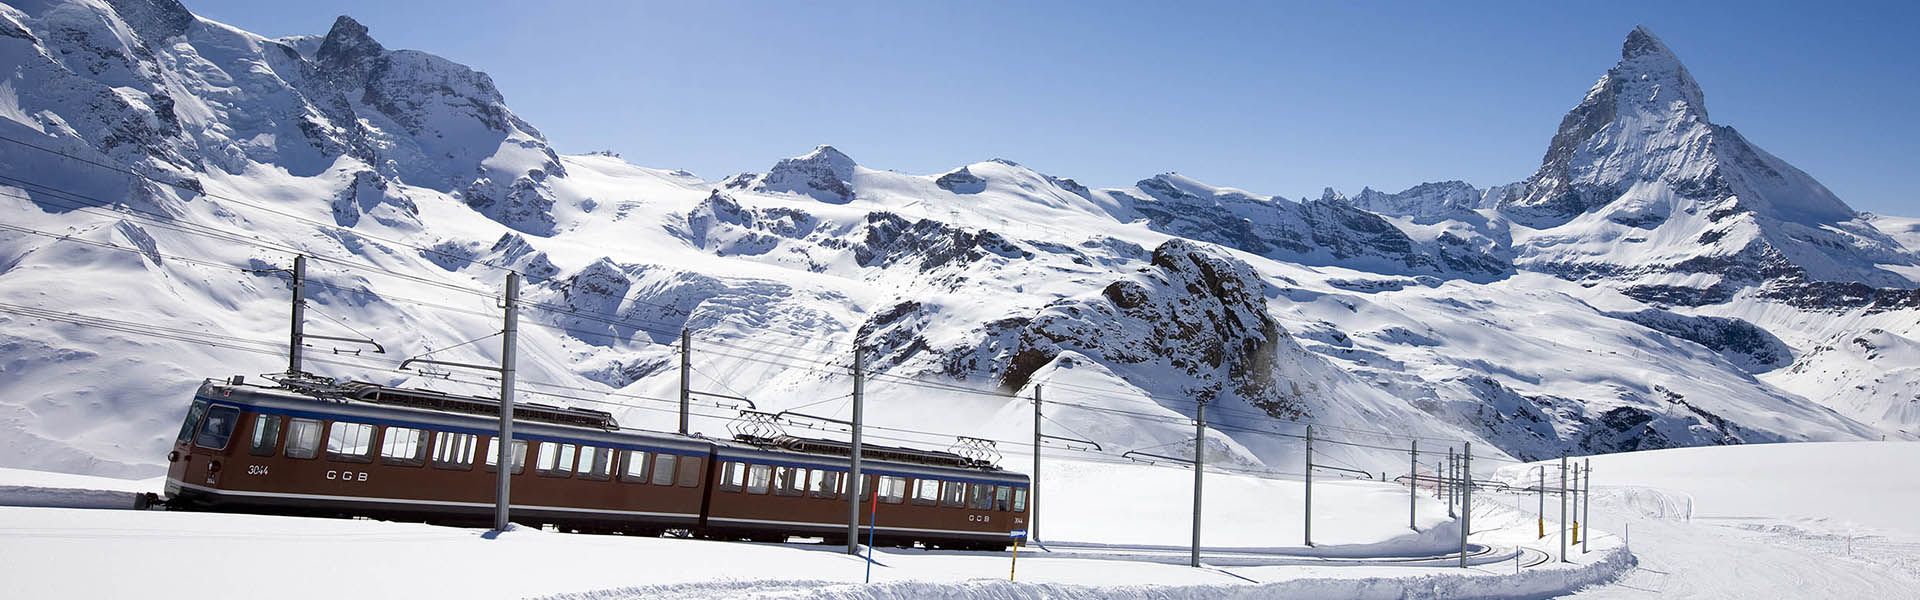 Legendar Zermatt - Services et équipements